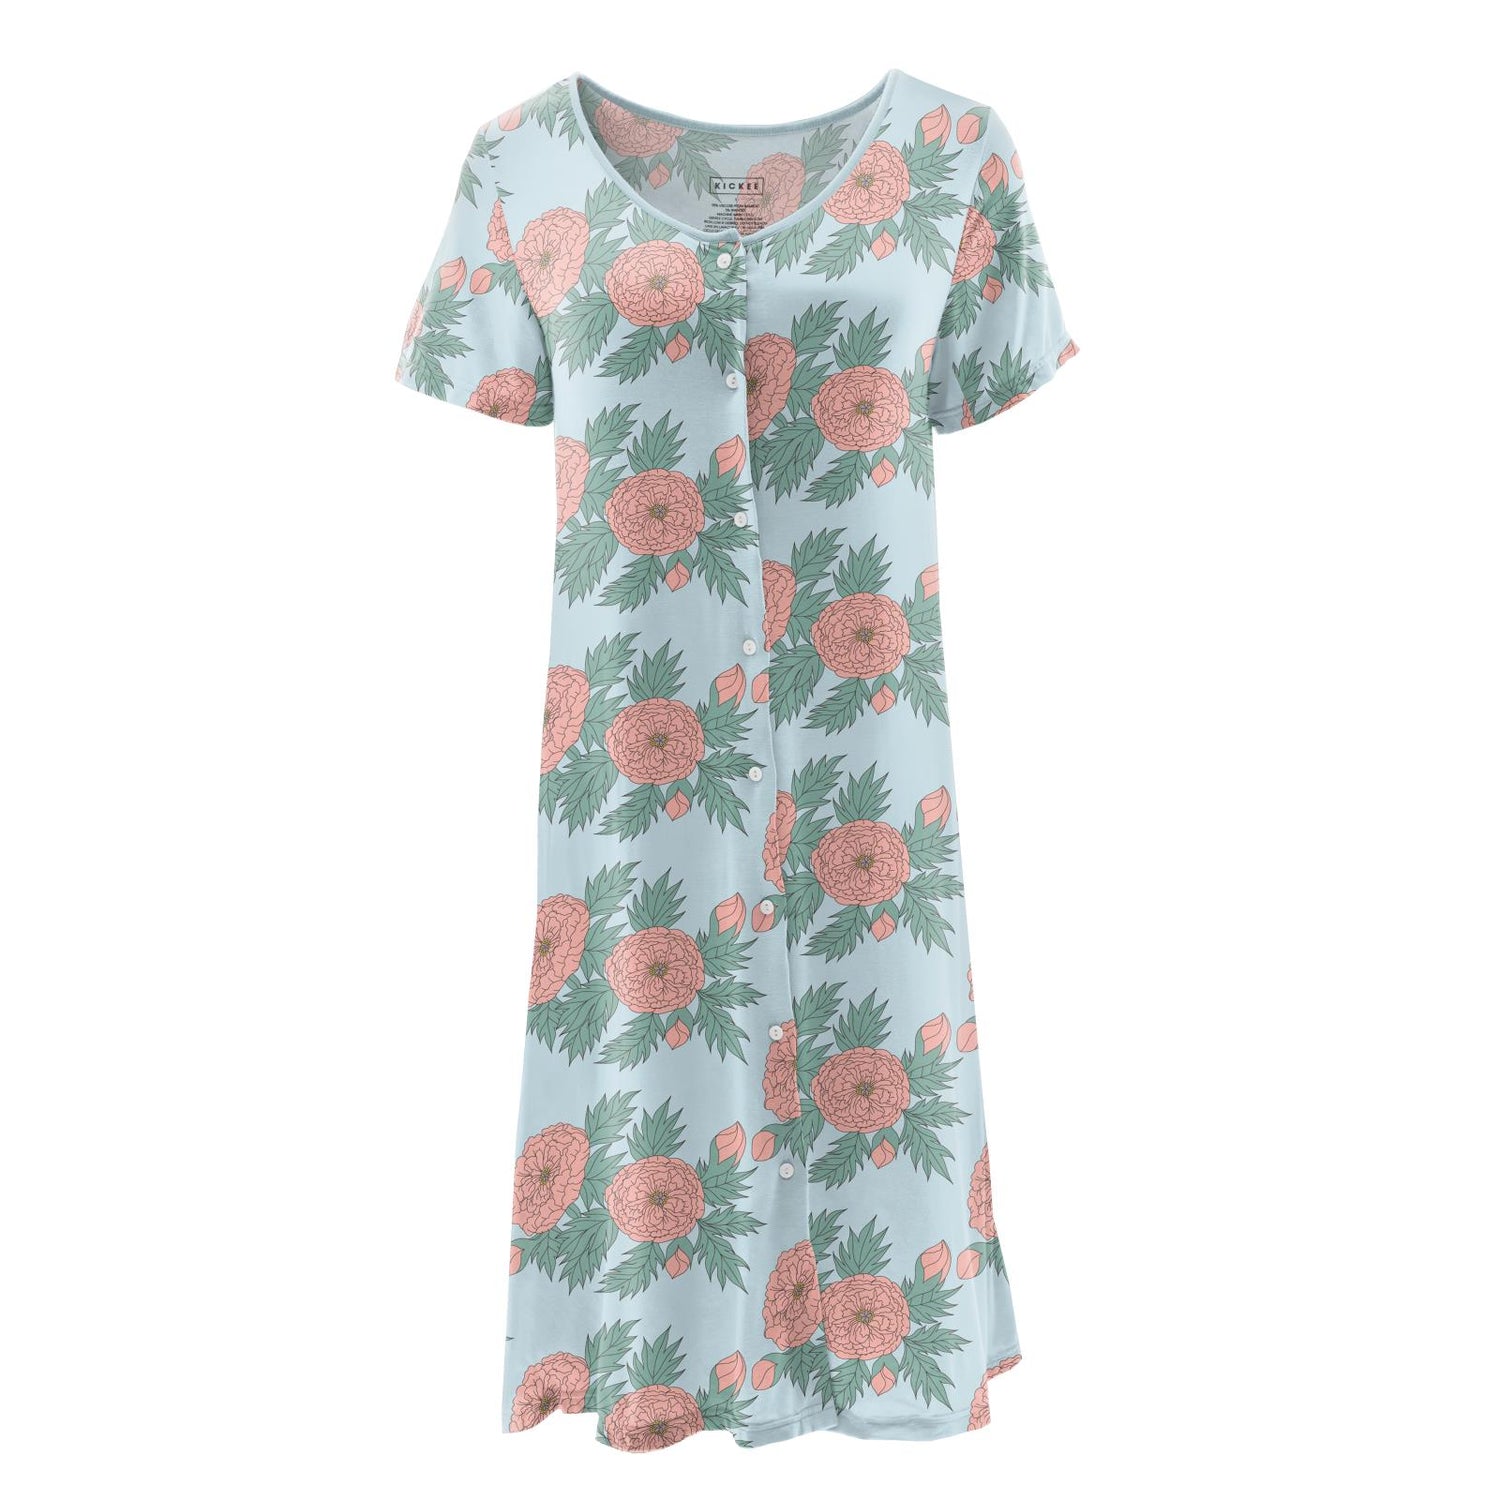 Women's Print Nursing Nightgown in Spring Sky Floral